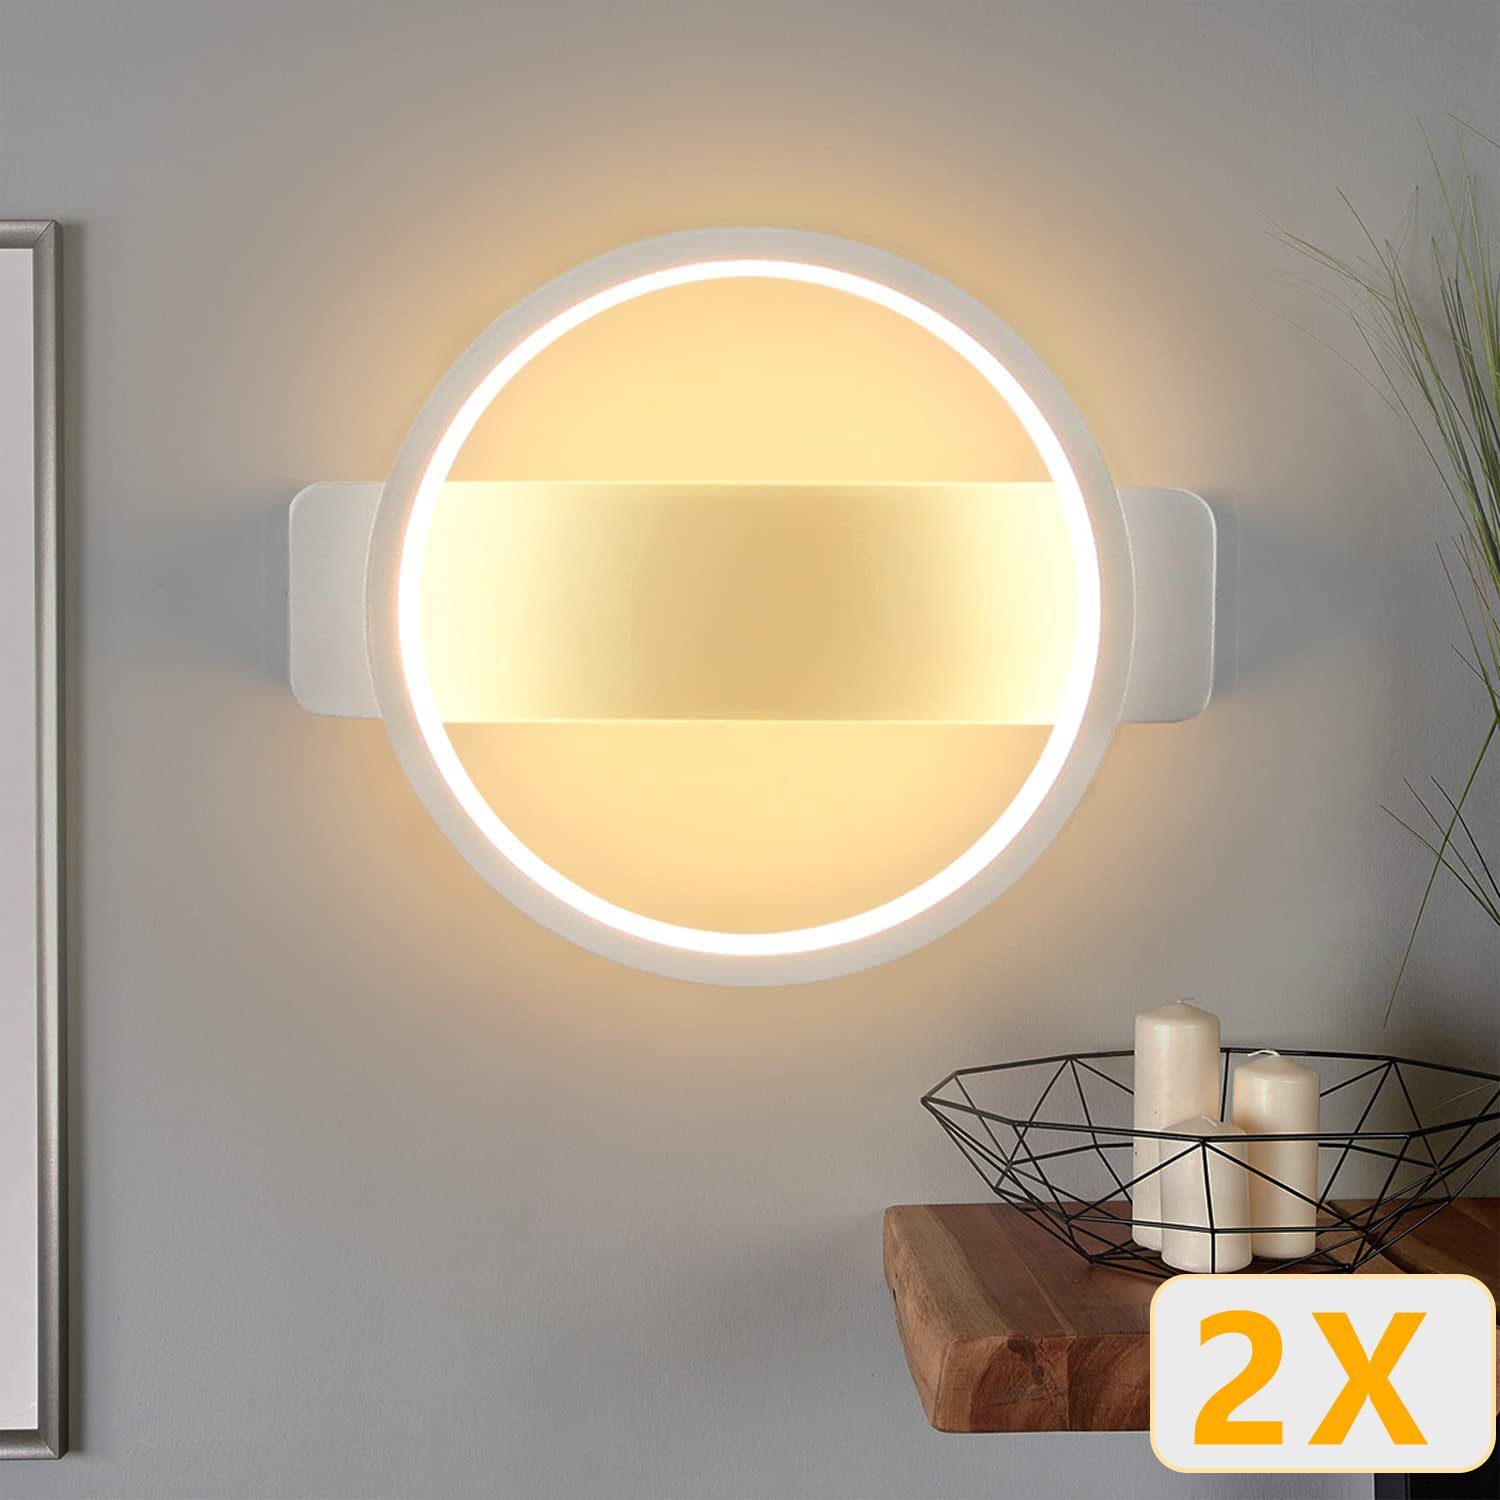 ZMH LED Wandleuchte Innen Modern LED Wandlampe 7W Warmweiß 3000K, 2 Stücke, LED fest integriert, Warmweiß, Weiß